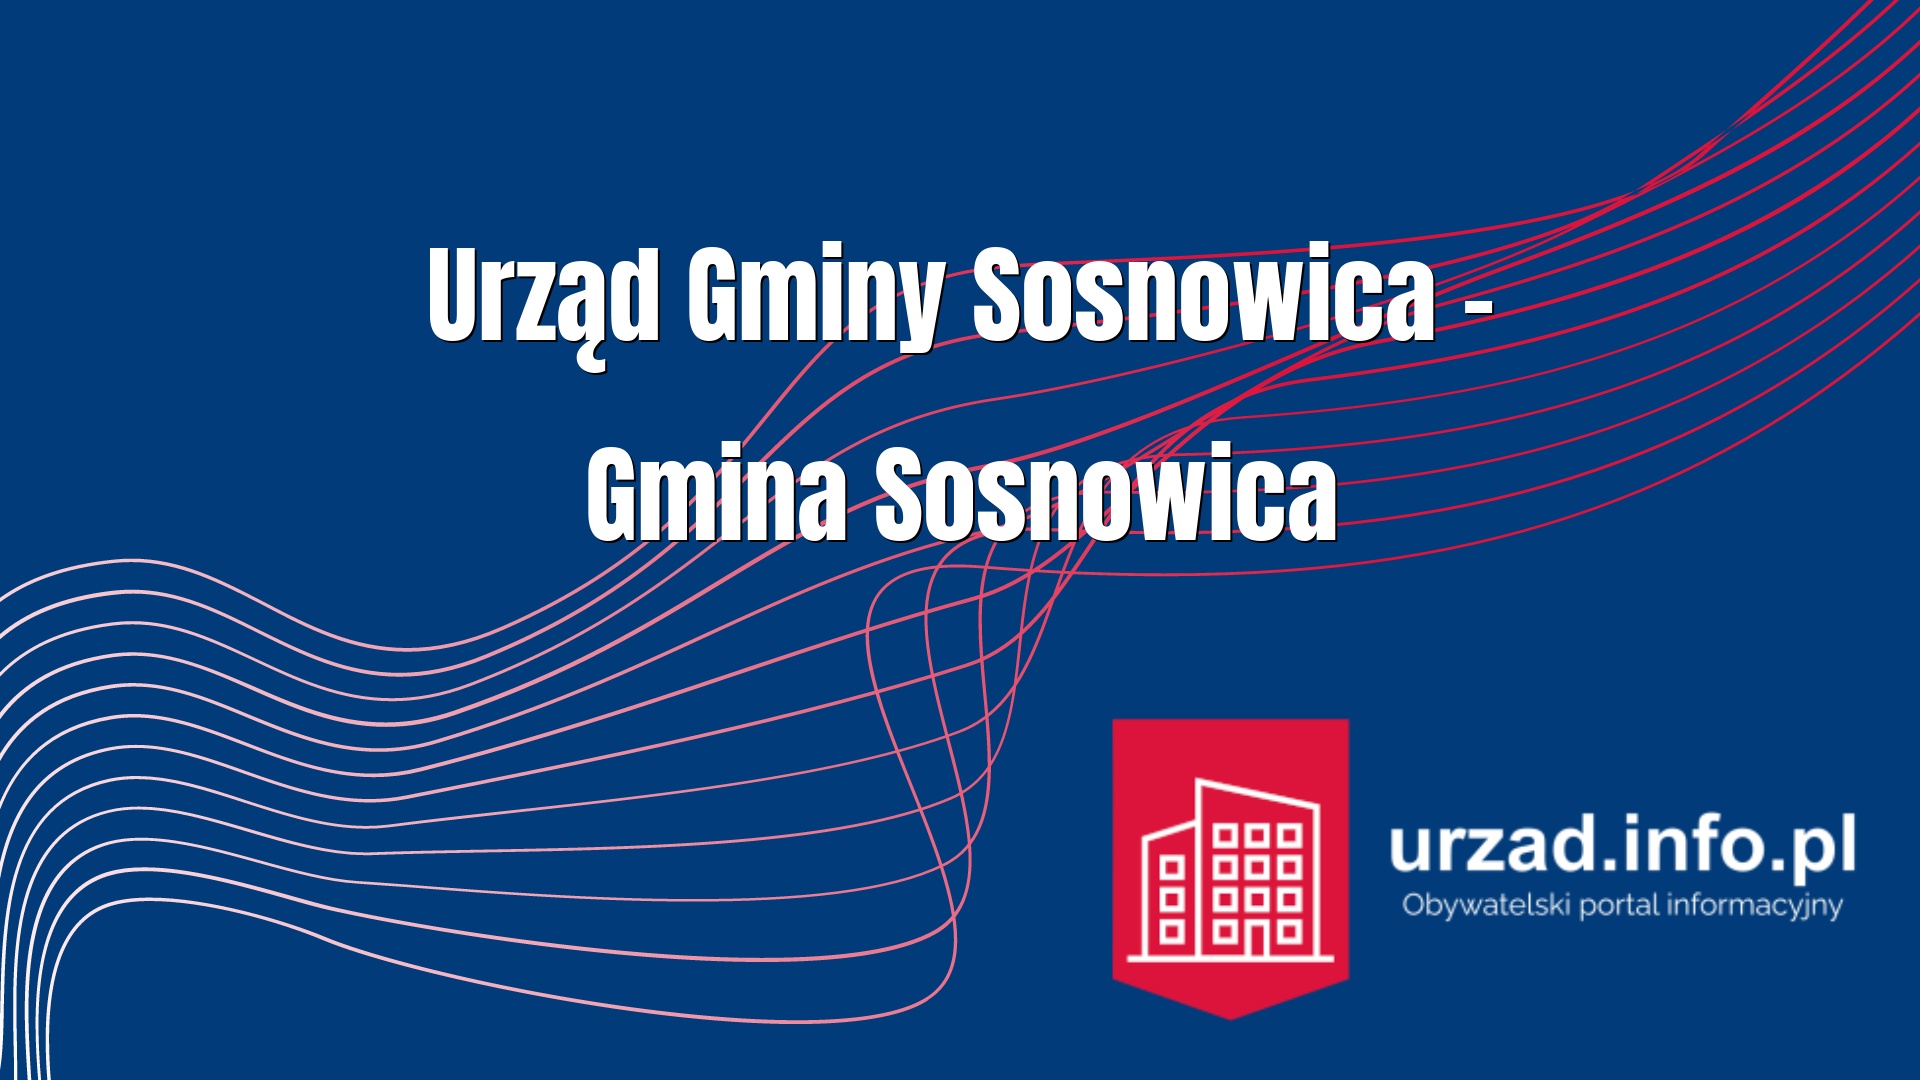 Urząd Gminy Sosnowica – Gmina Sosnowica